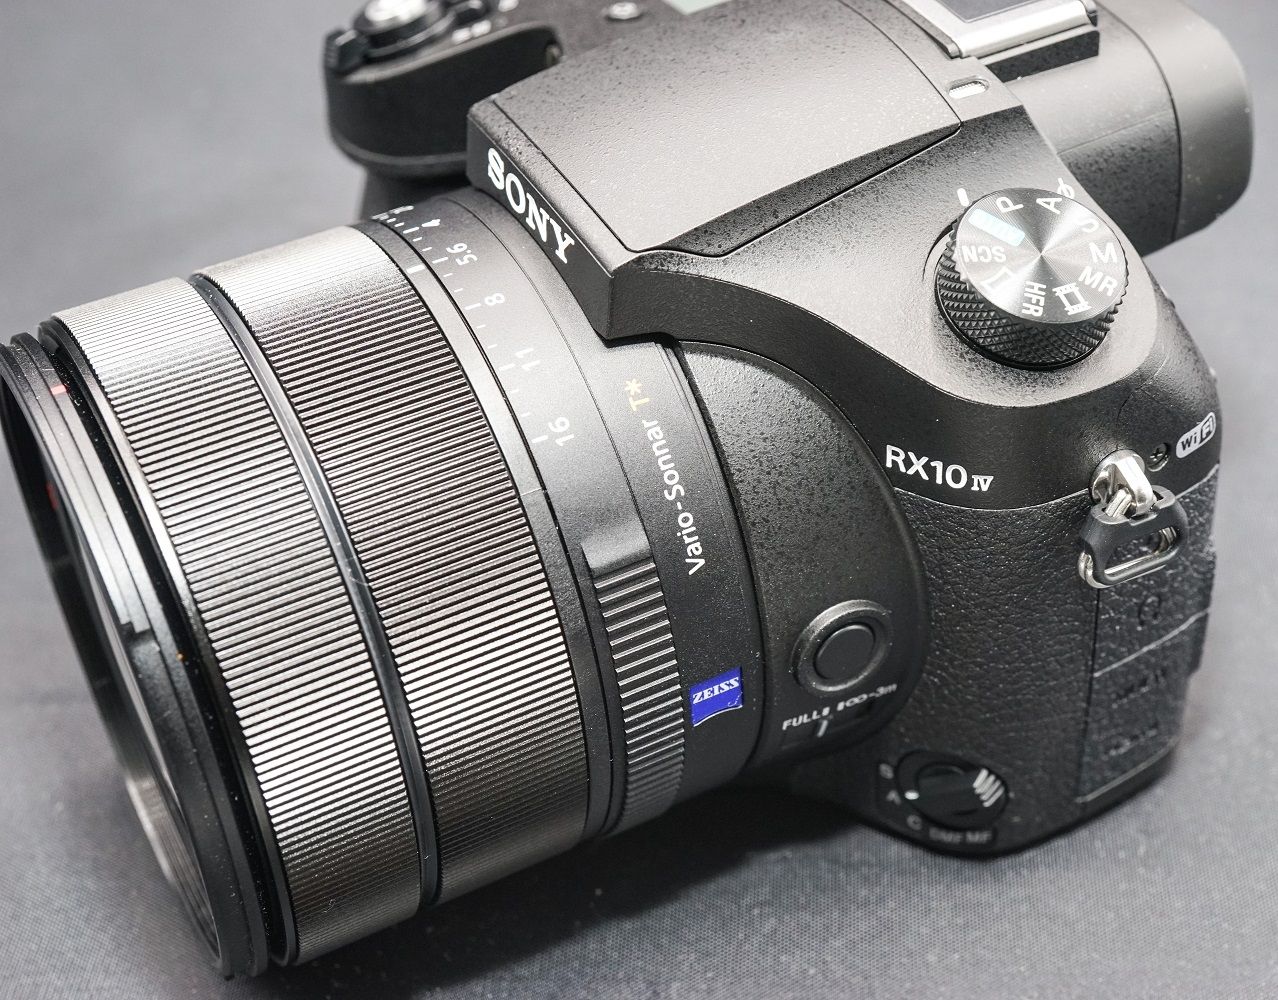 SONY Sony Cyber-shot DSC-RX10 IV Digital Cameras - Black